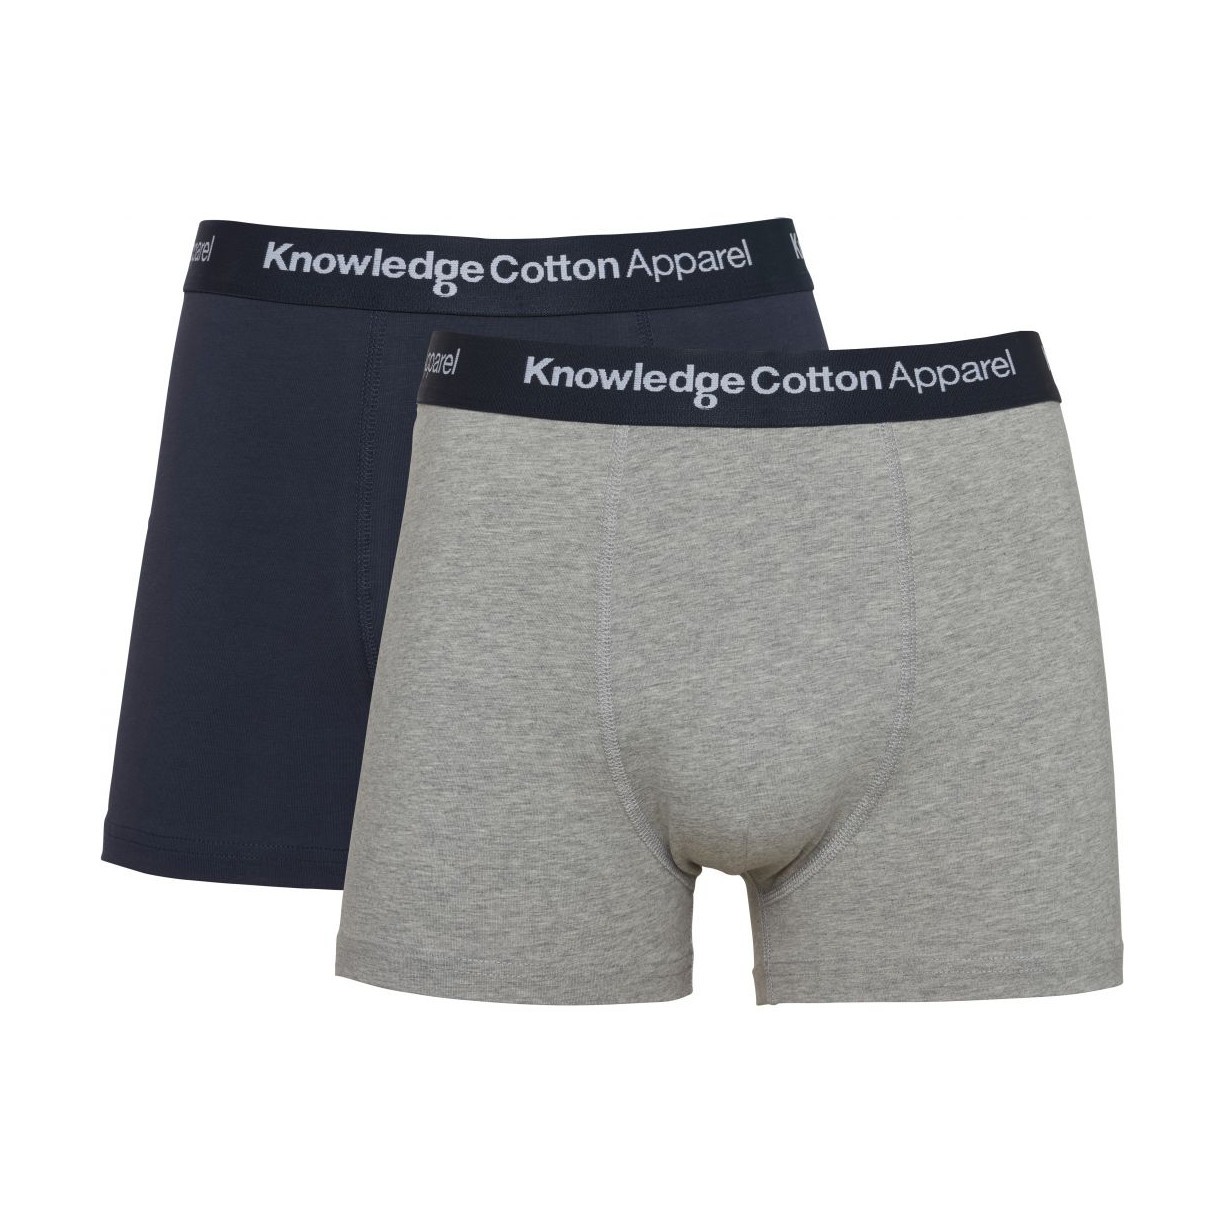 MAPLE 2 pack underwear - Vegan Grey Melange - Knowledge Cotton Apparel - MARKEN | Knowledge Cotton Apparel